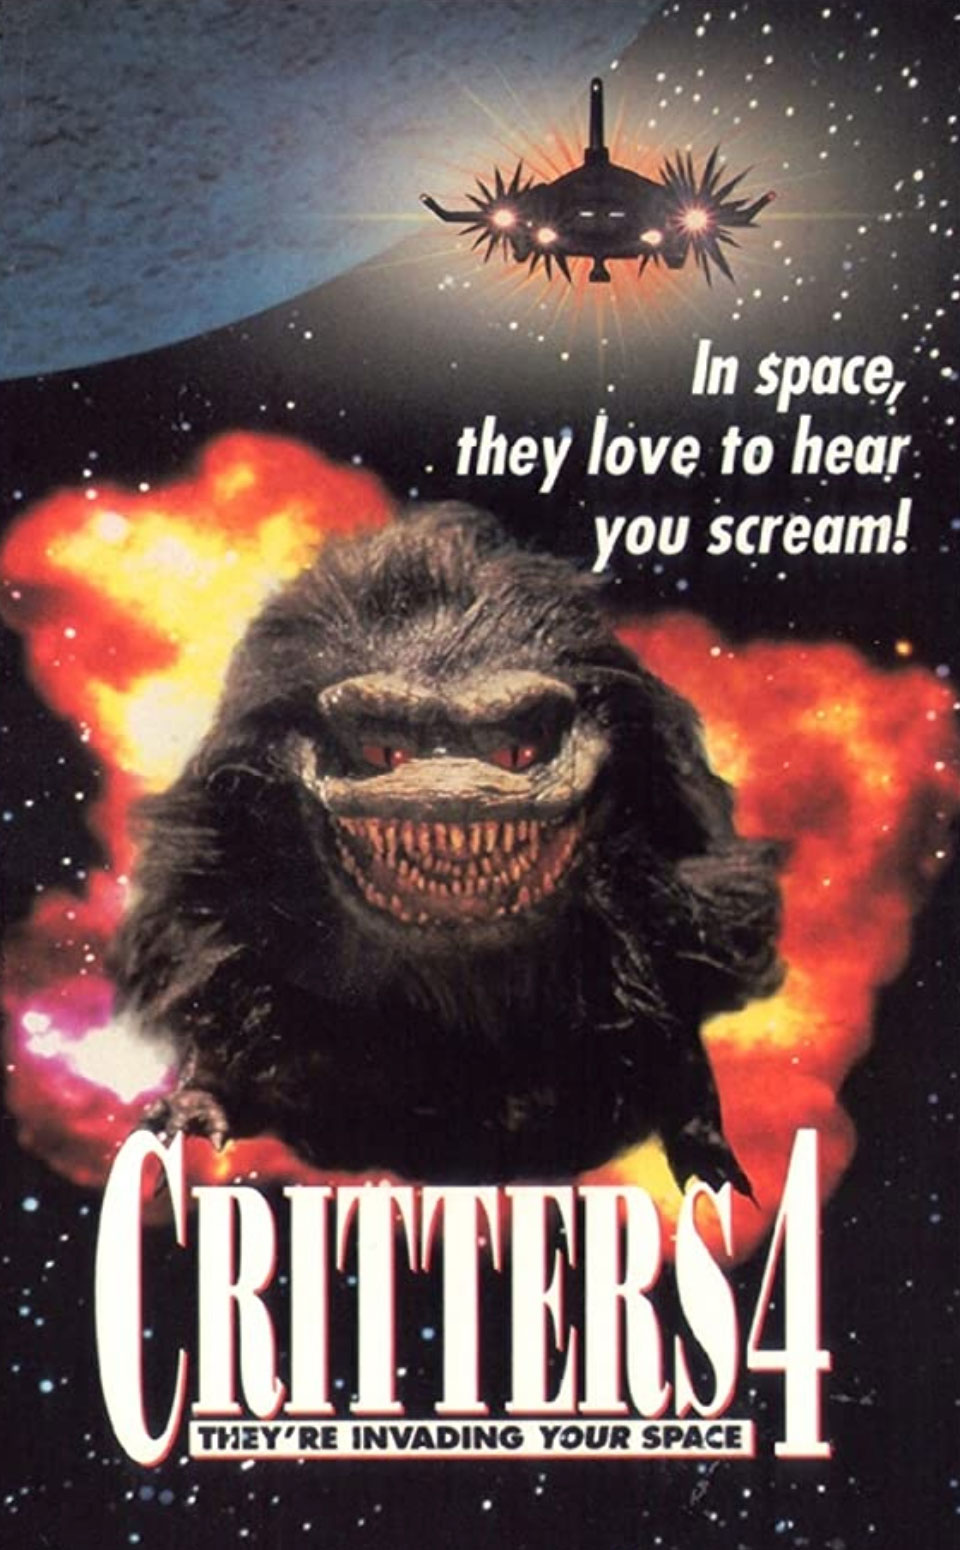 Critters 4 VHS box